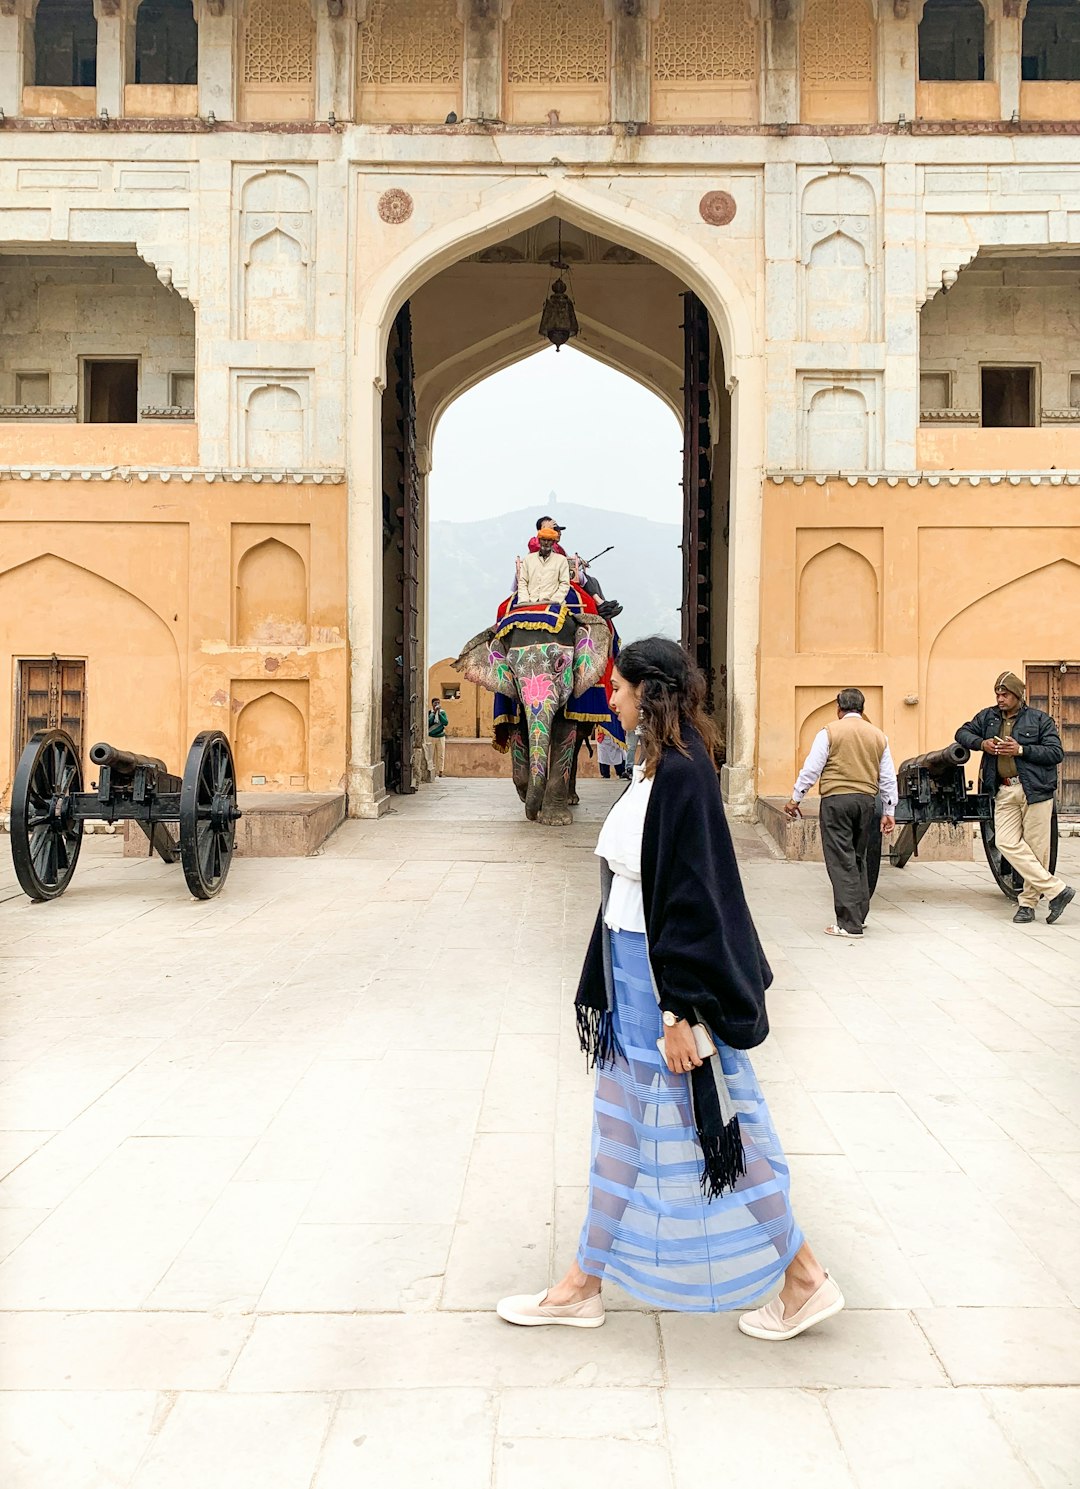 Temple photo spot Amber Fort Jaipur